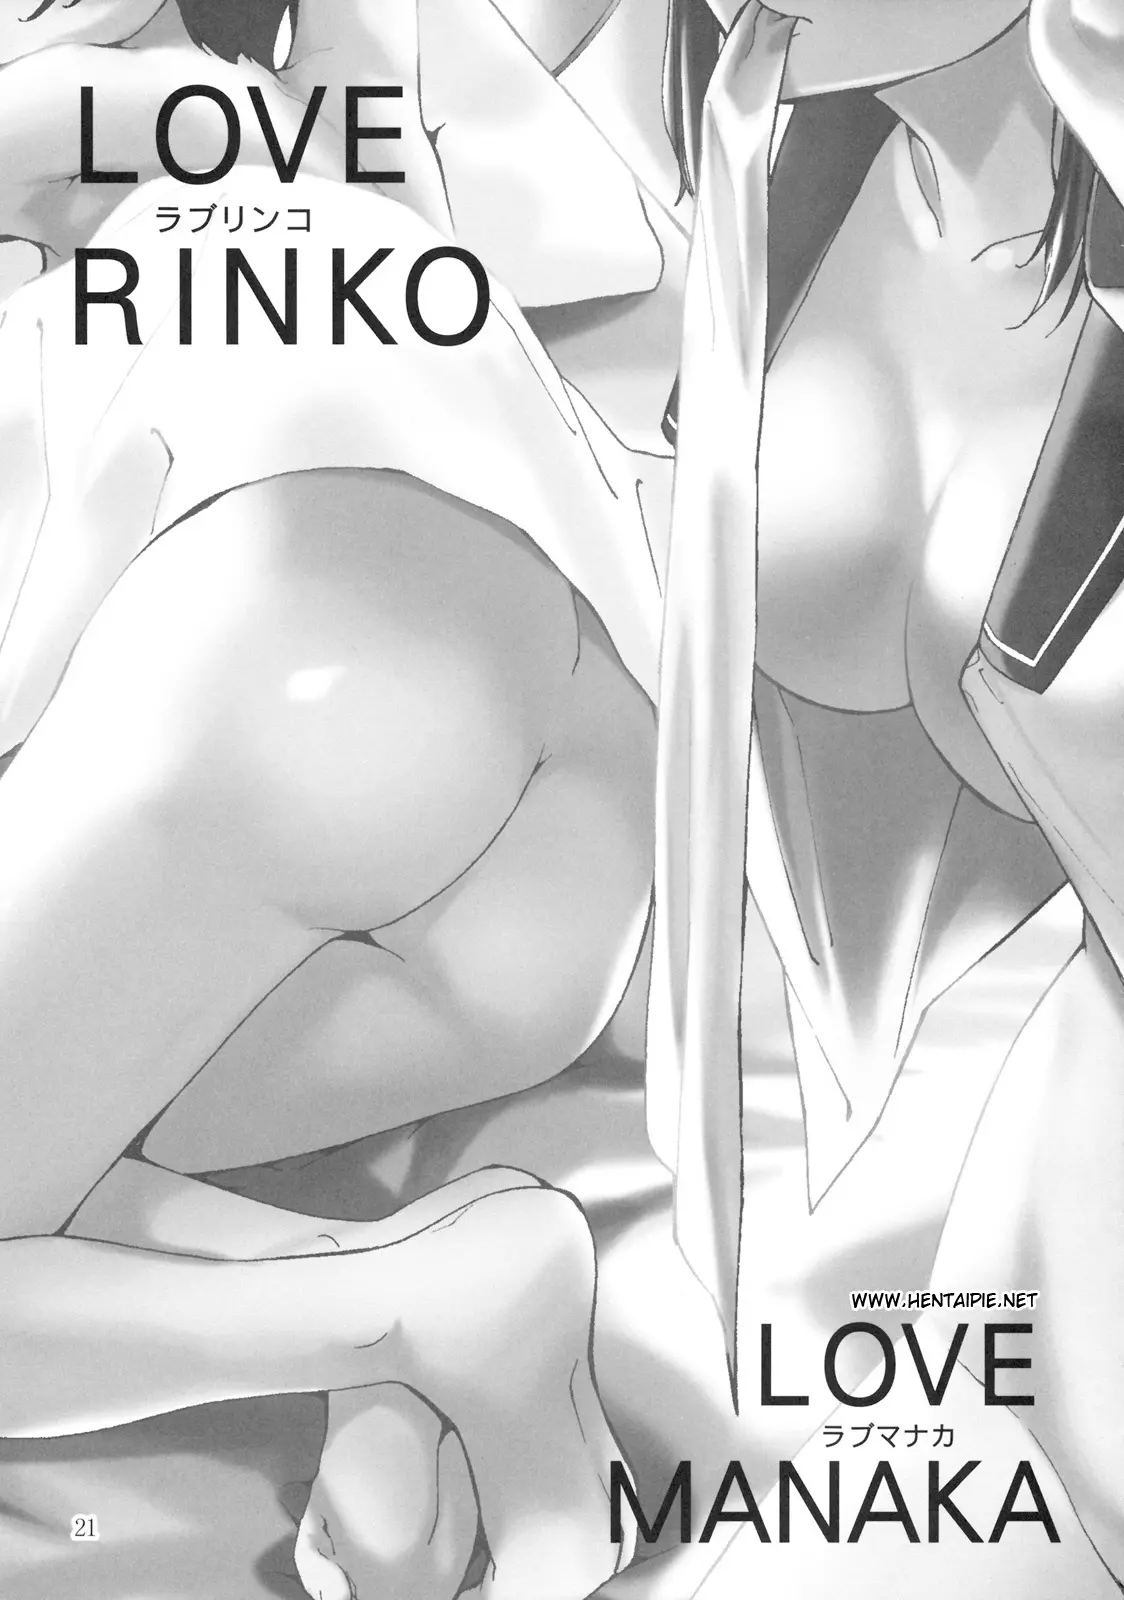 LOVE RINKO+LOVE MANAKA